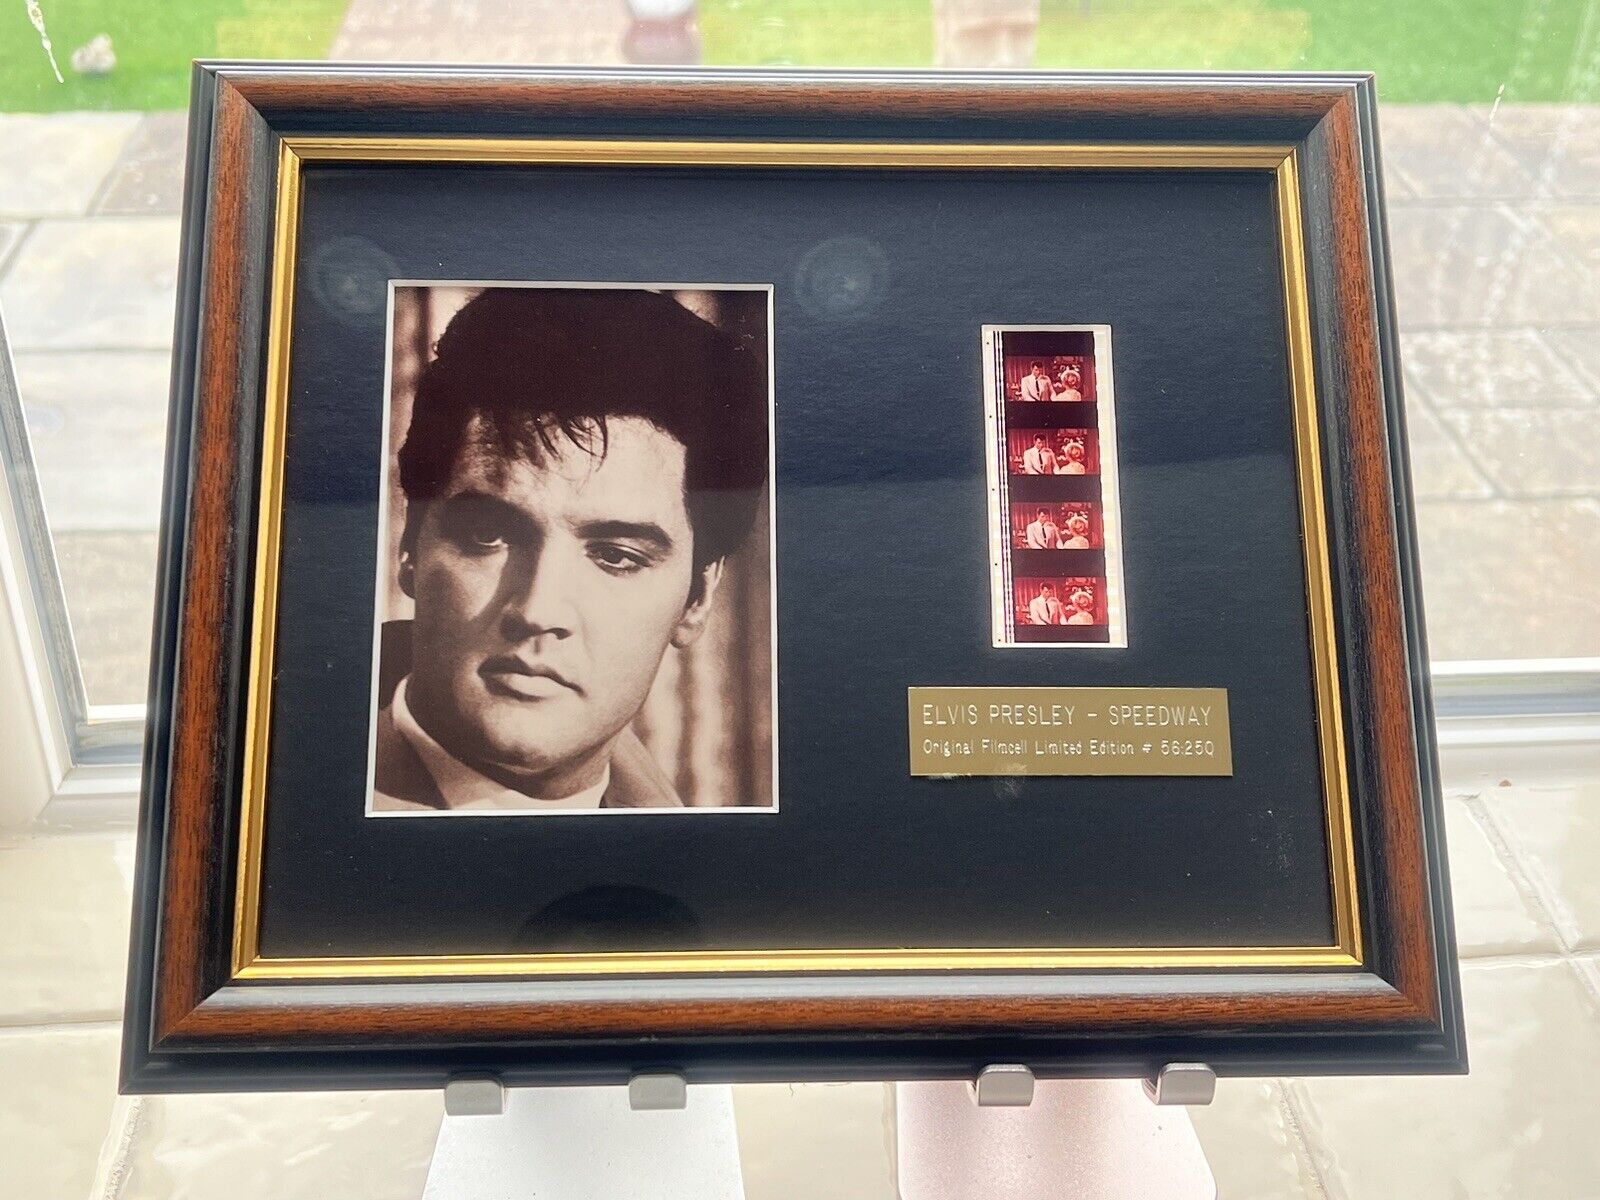 Elvis Presley “Speedway” Ltd. Edition Original 35mm Film Cell - COA - #56/250